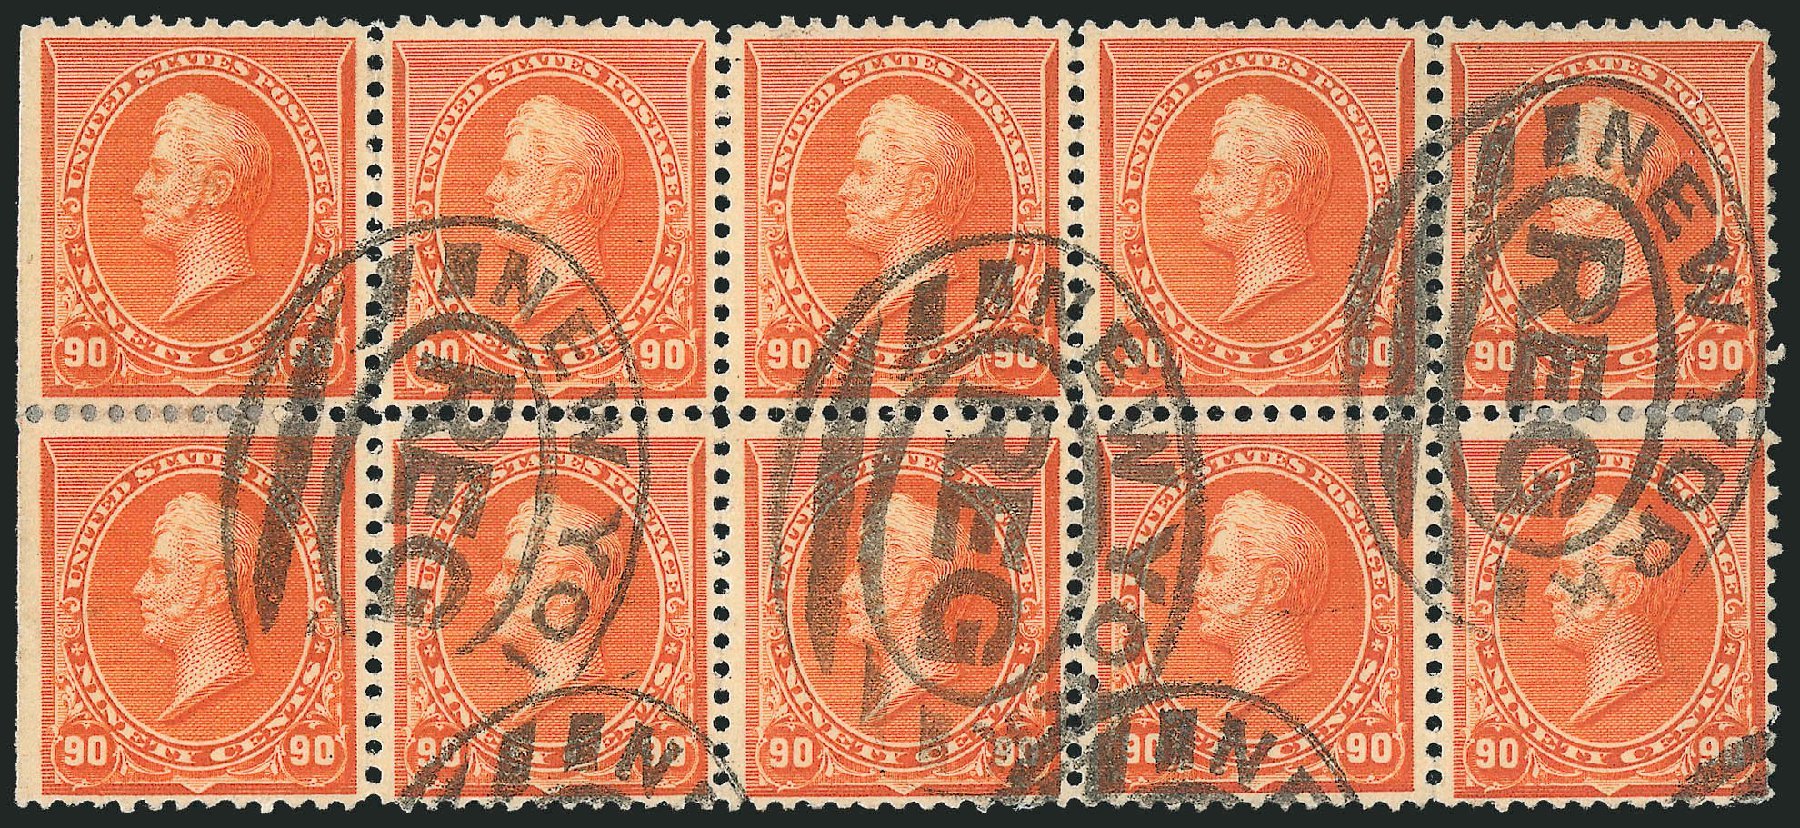 Costs of US Stamp Scott 229: 1890 90c Perry. Robert Siegel Auction Galleries, Nov 2014, Sale 1084, Lot 3520